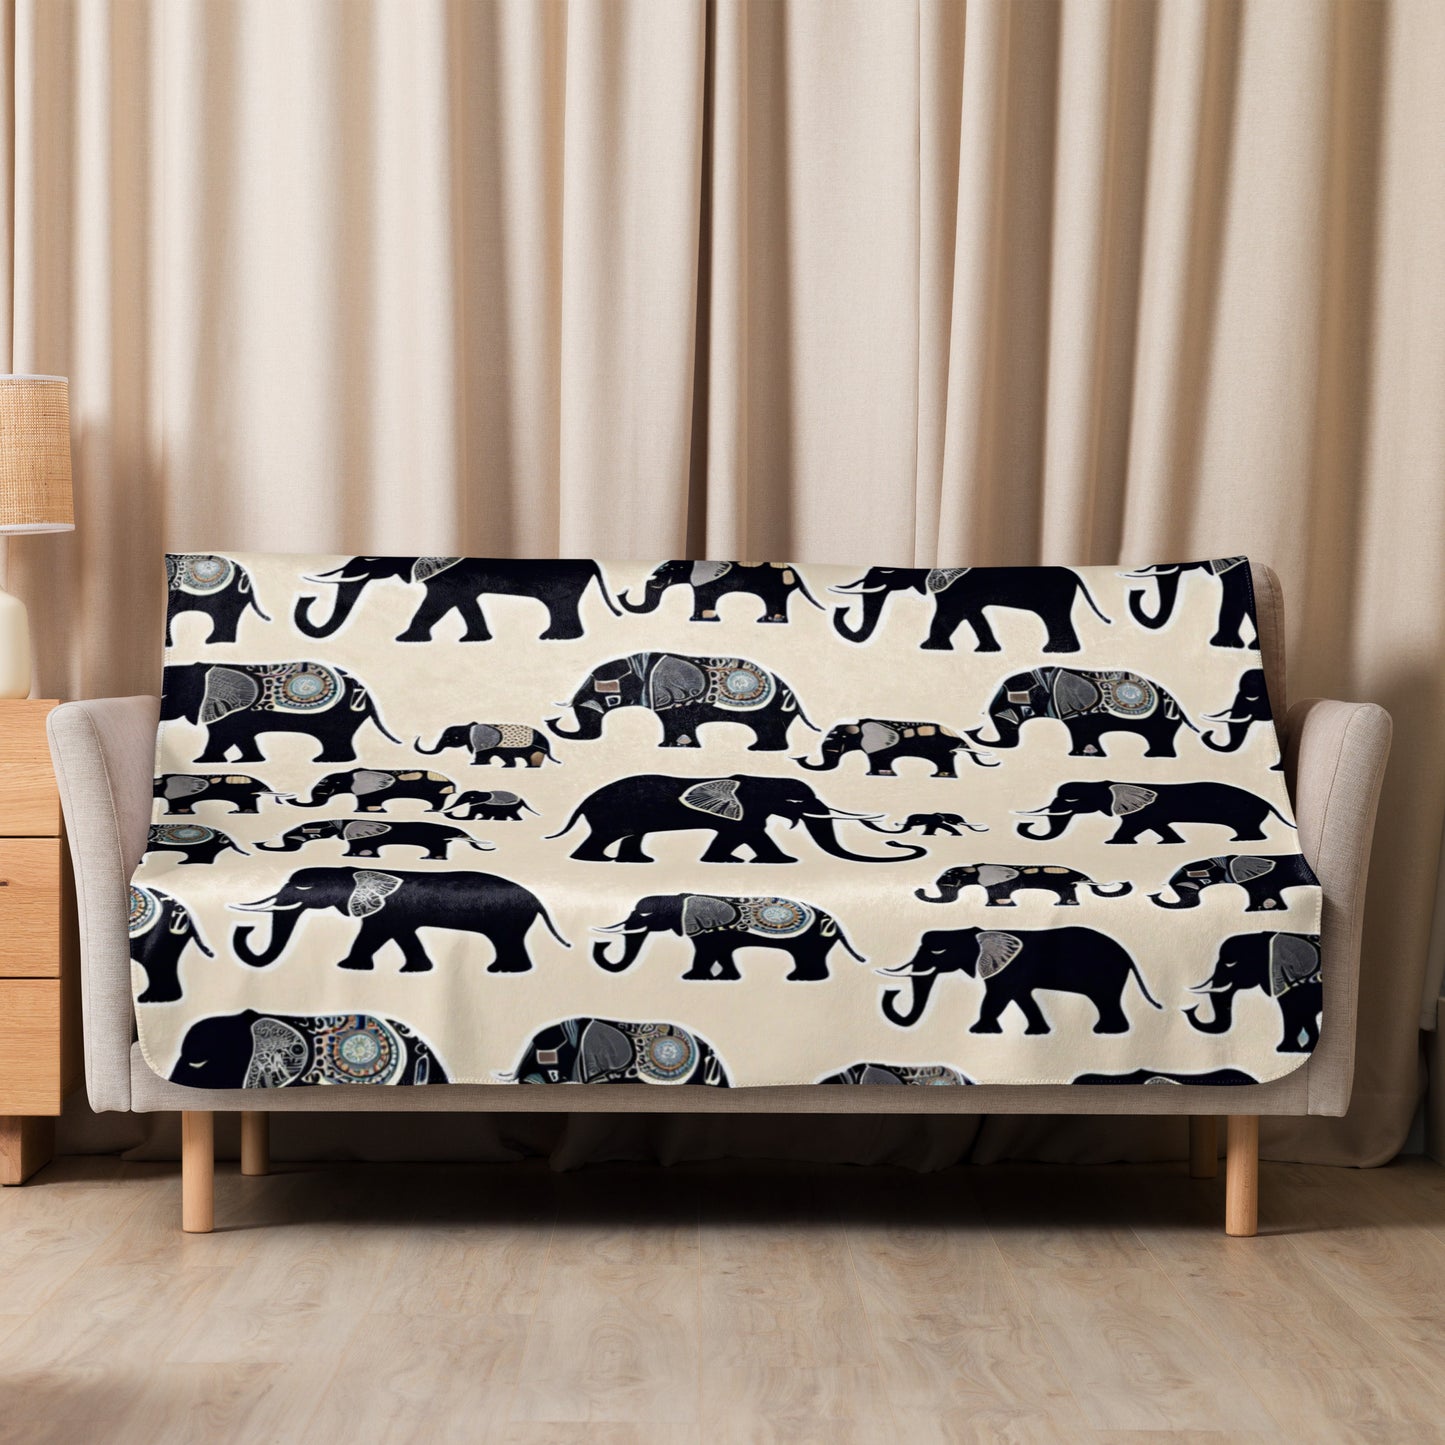 Elephant Sherpa Blanket, Colorful Elephant Blanket Gift, Elephant Lover Gift